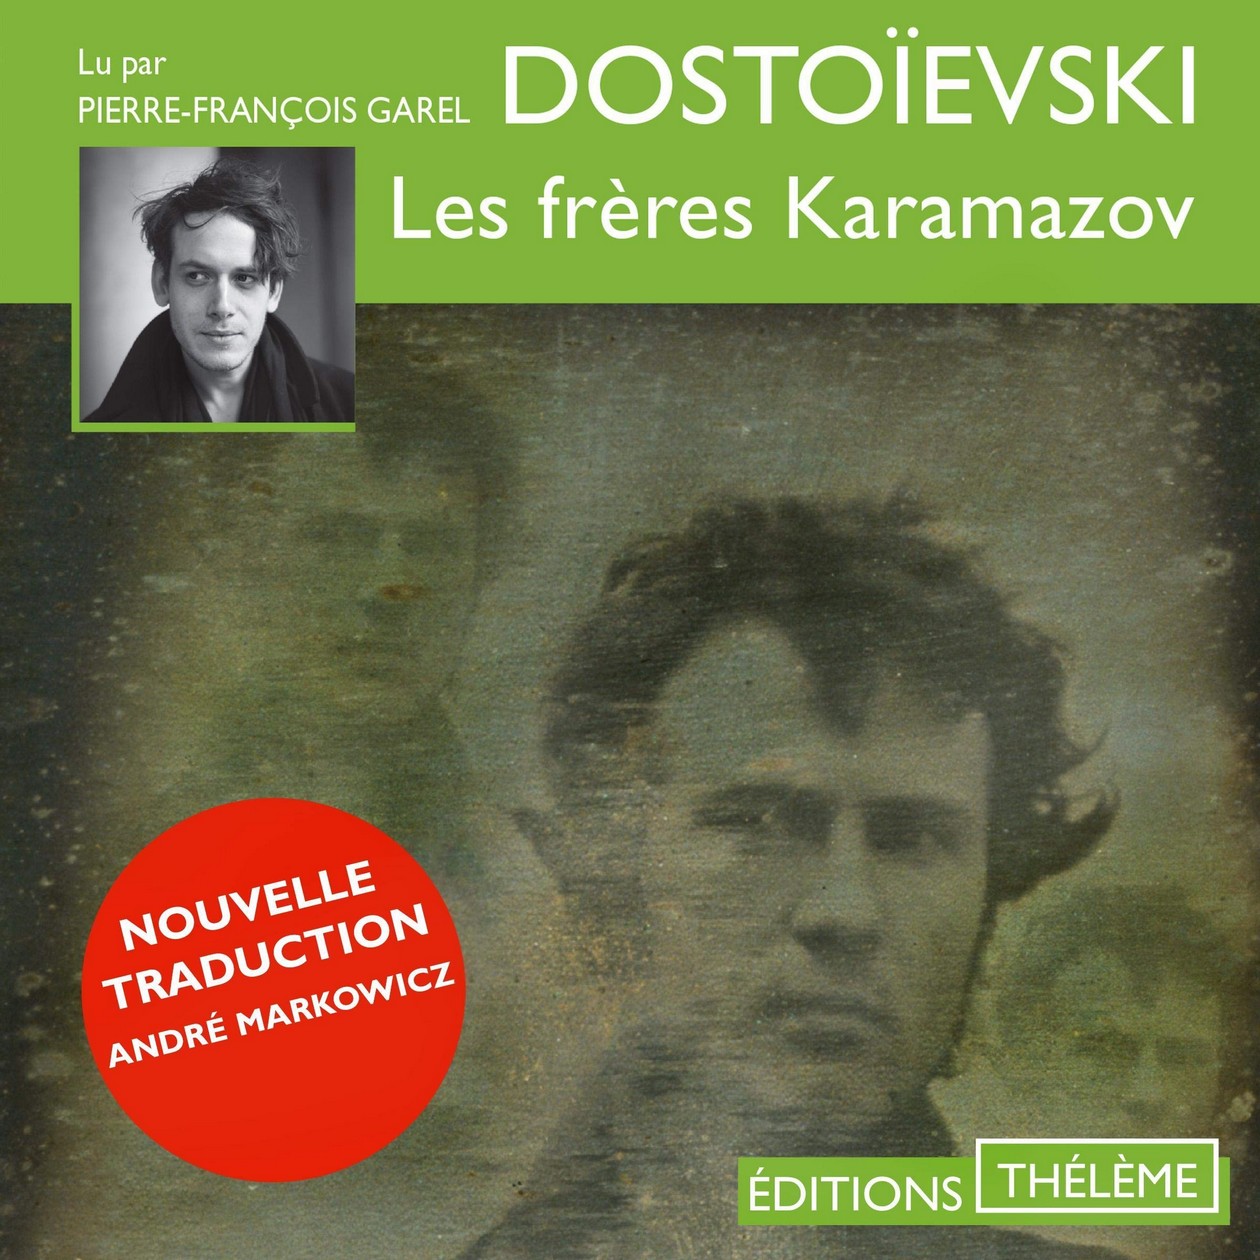 Audiobook / Livre audio : Dostoïevski, Les frères Karamazov. Lu par Pierre-François Garel (43h44)